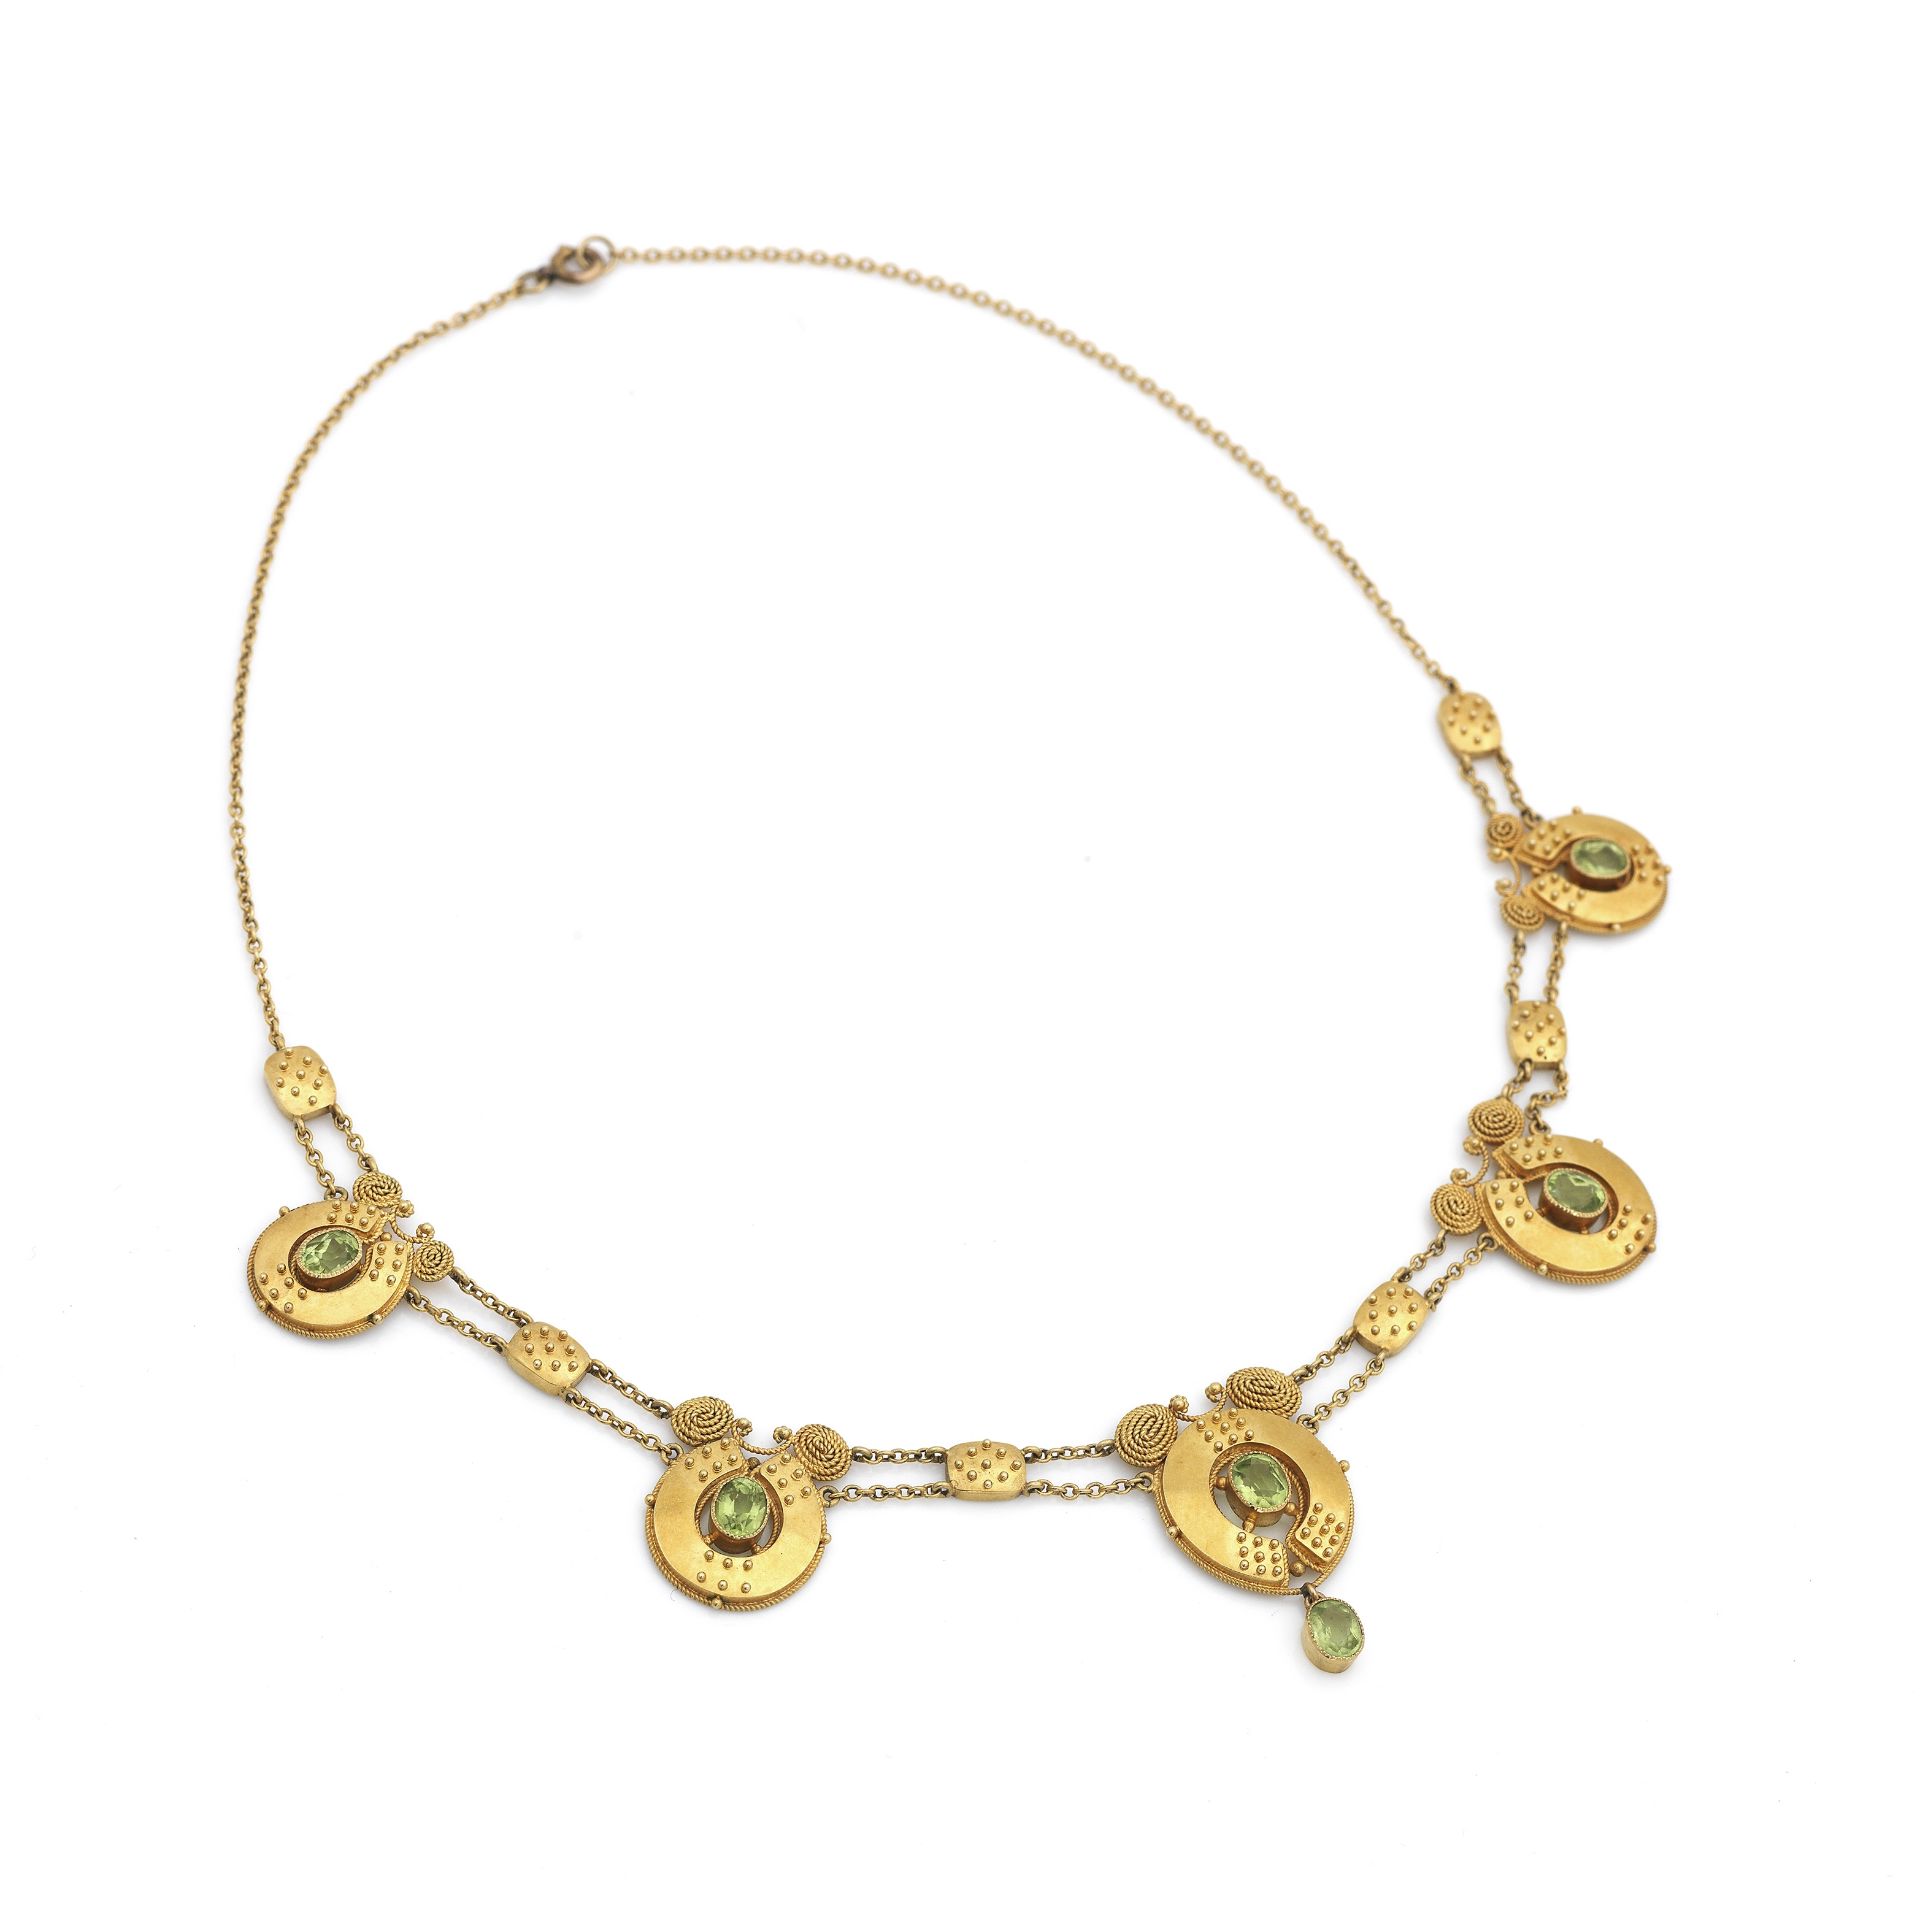 A peridot necklace